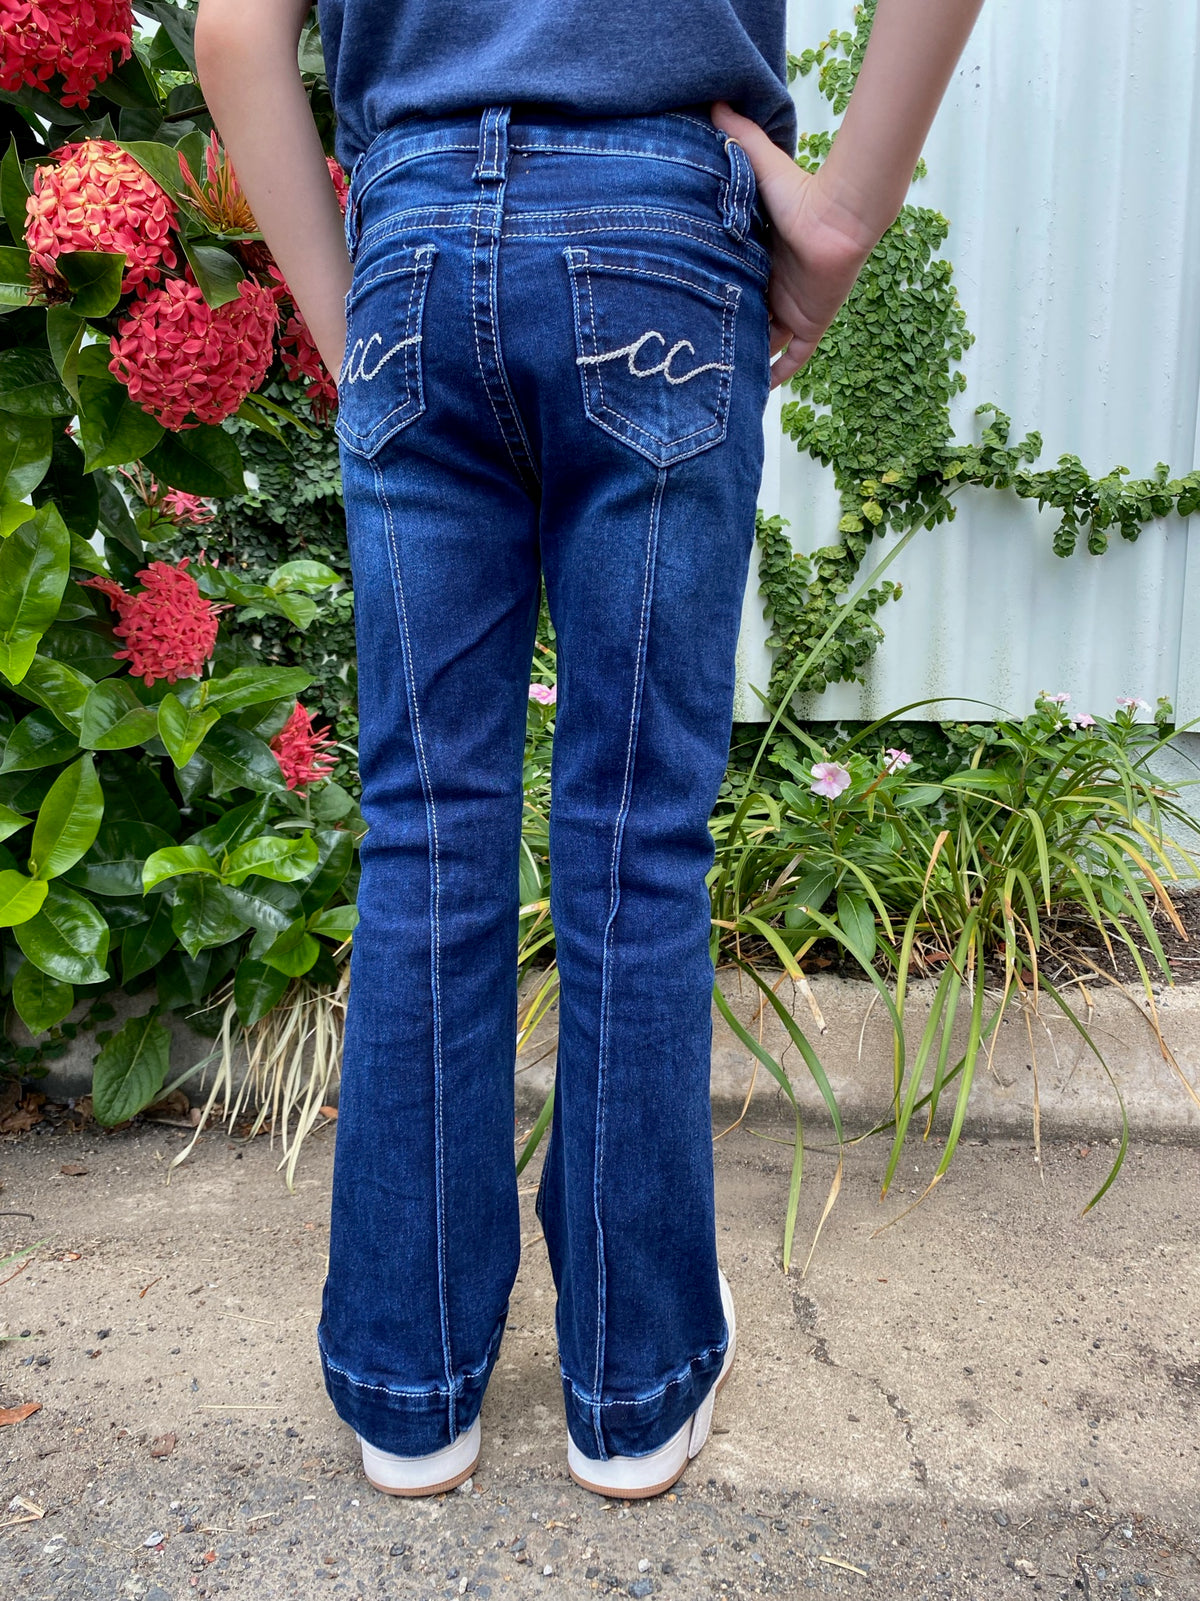 Girl's CC Western Jeans - Dark Wash Trouser